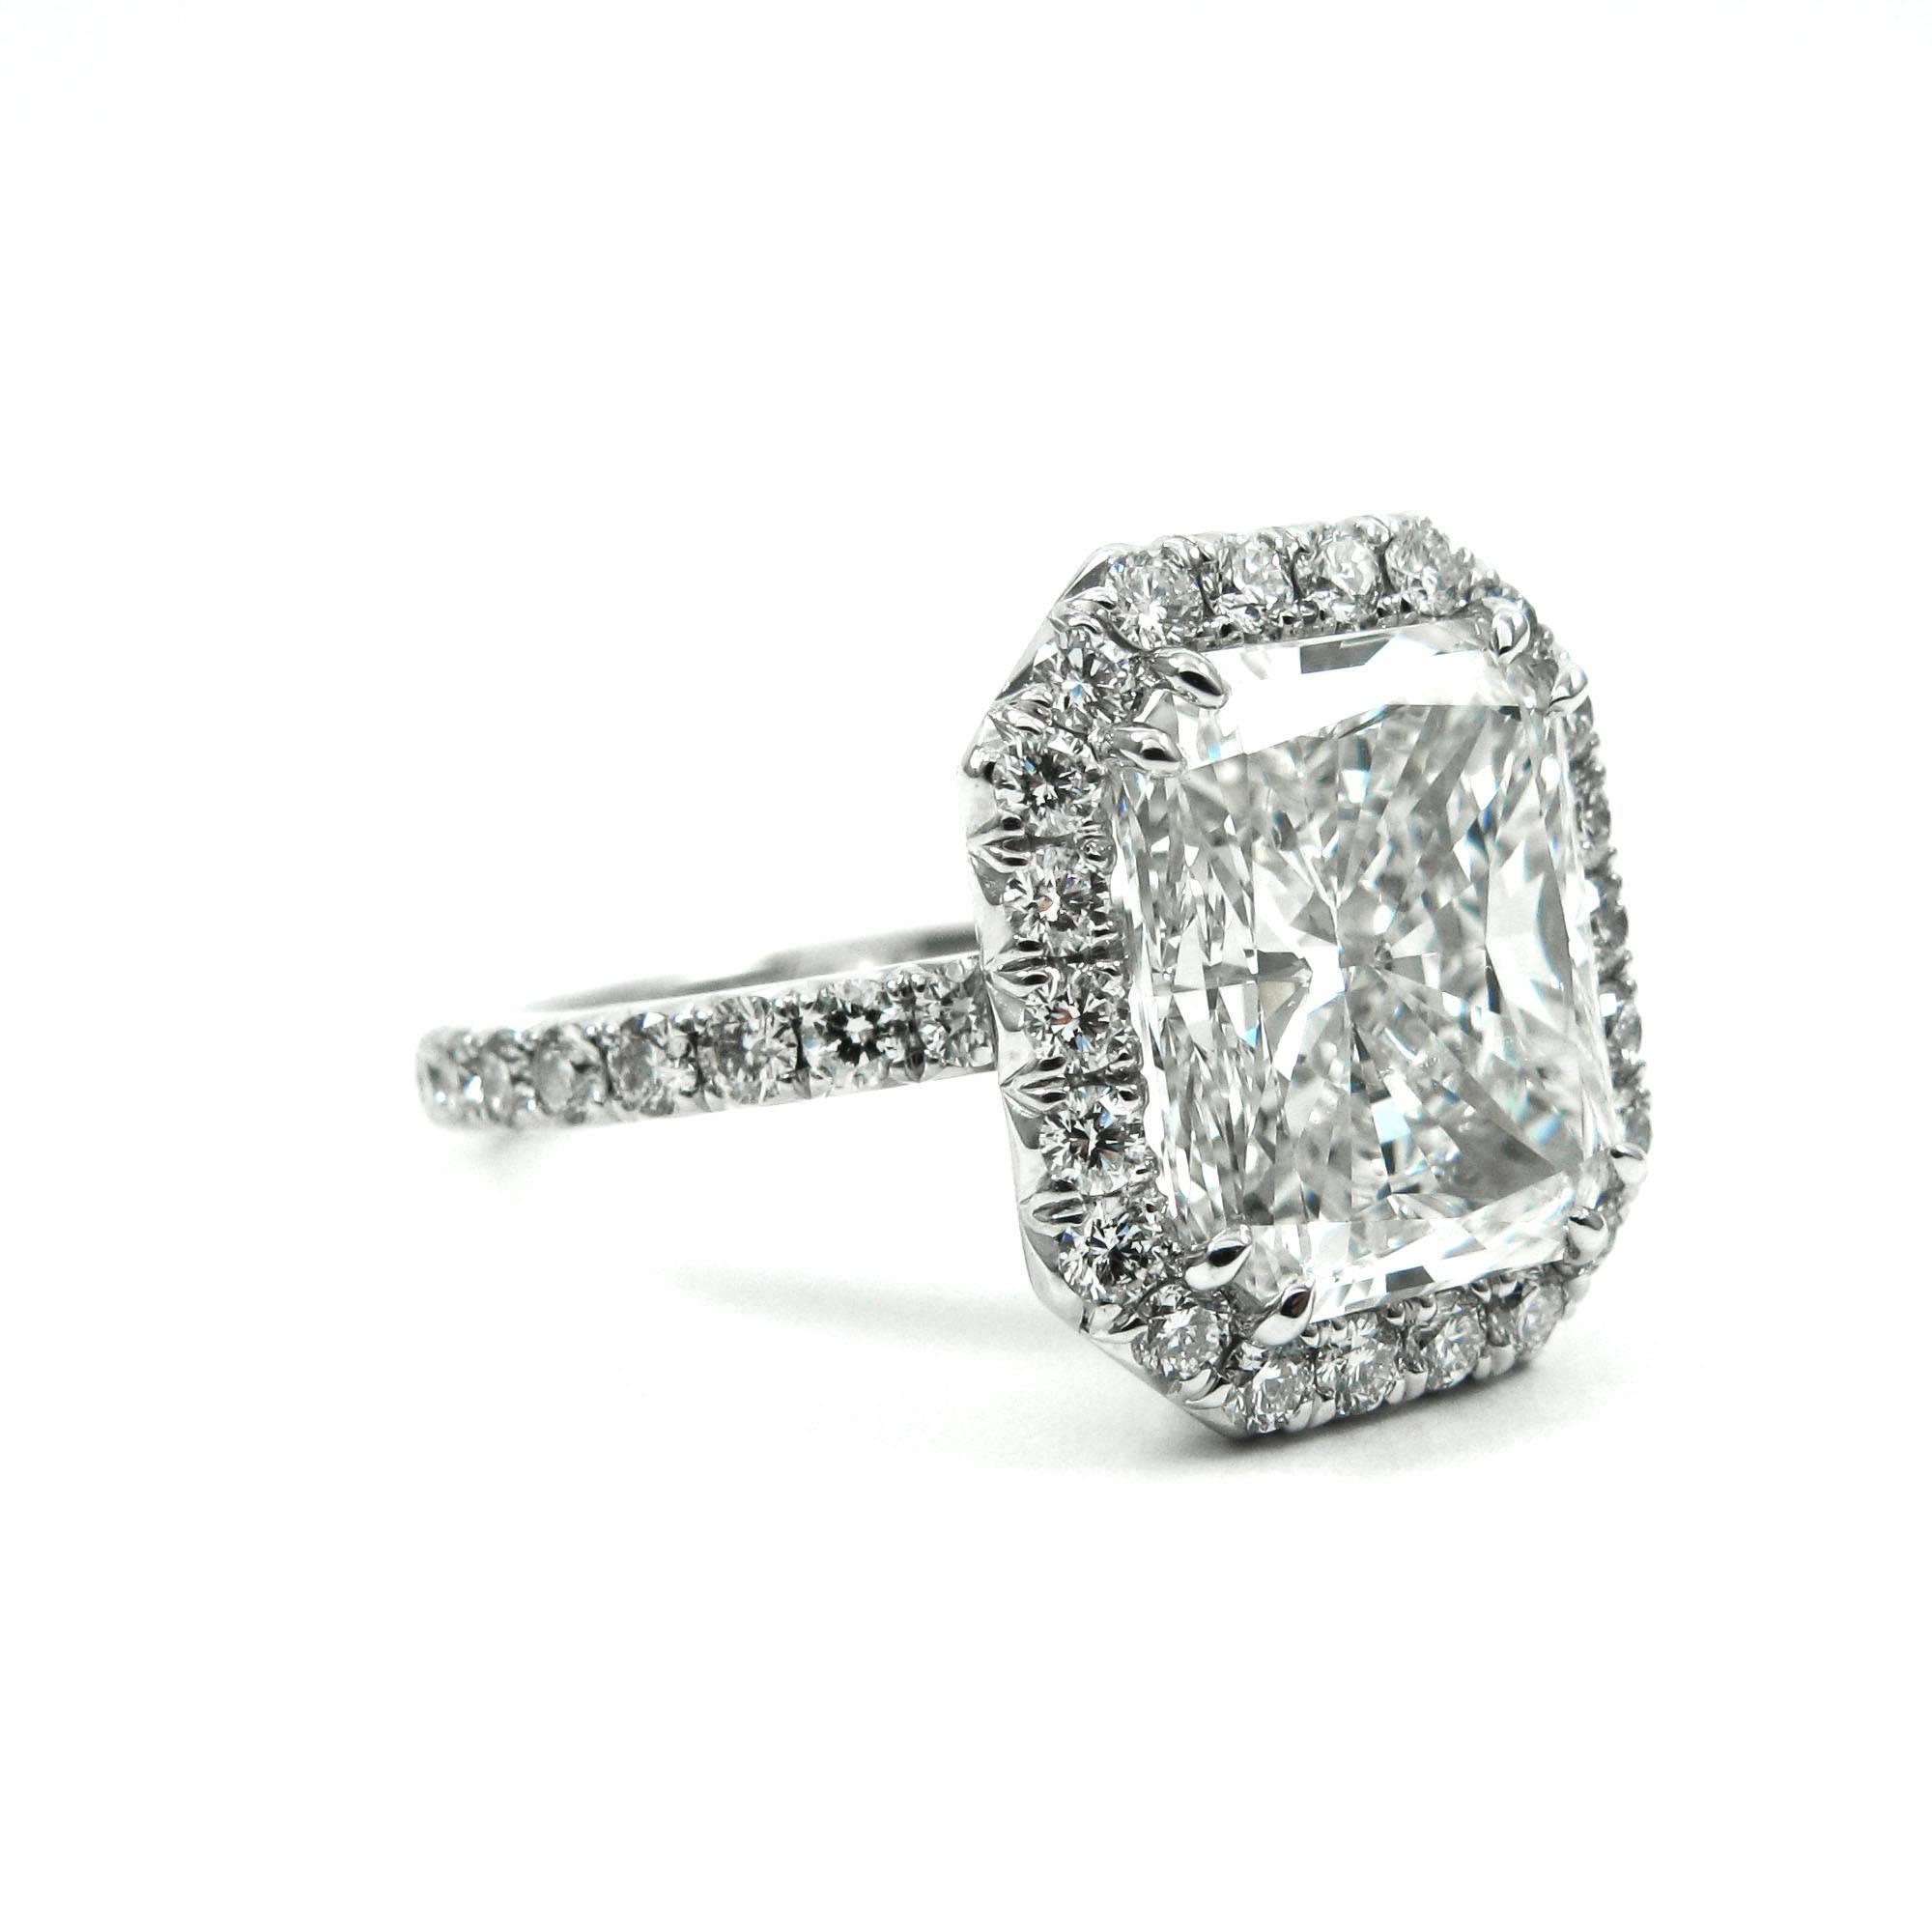 elongated radiant cut diamond ring with halo